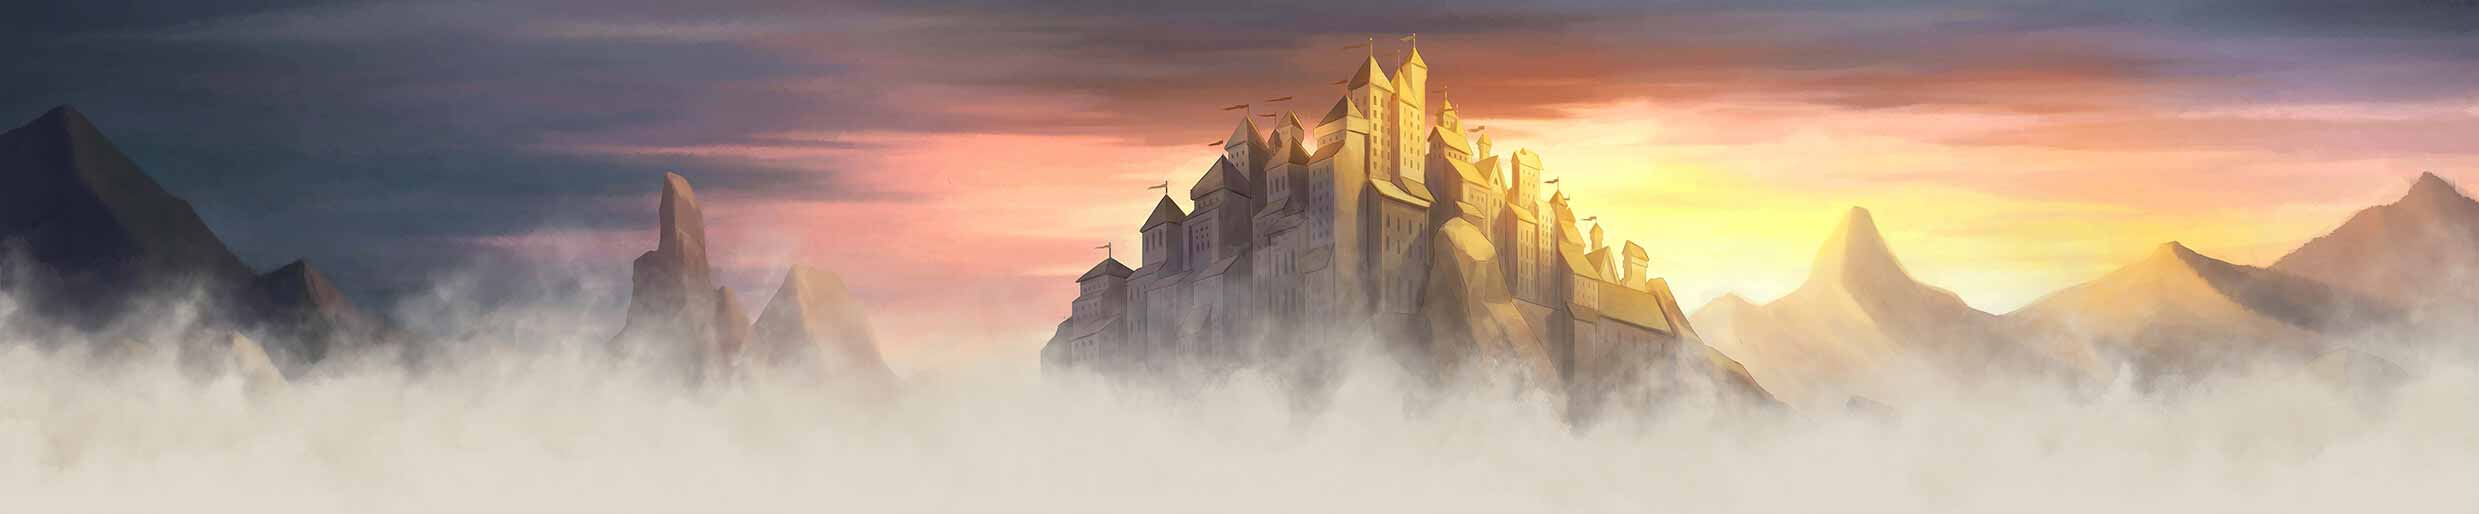 Travian: Legends غيوم خلفية القلعة